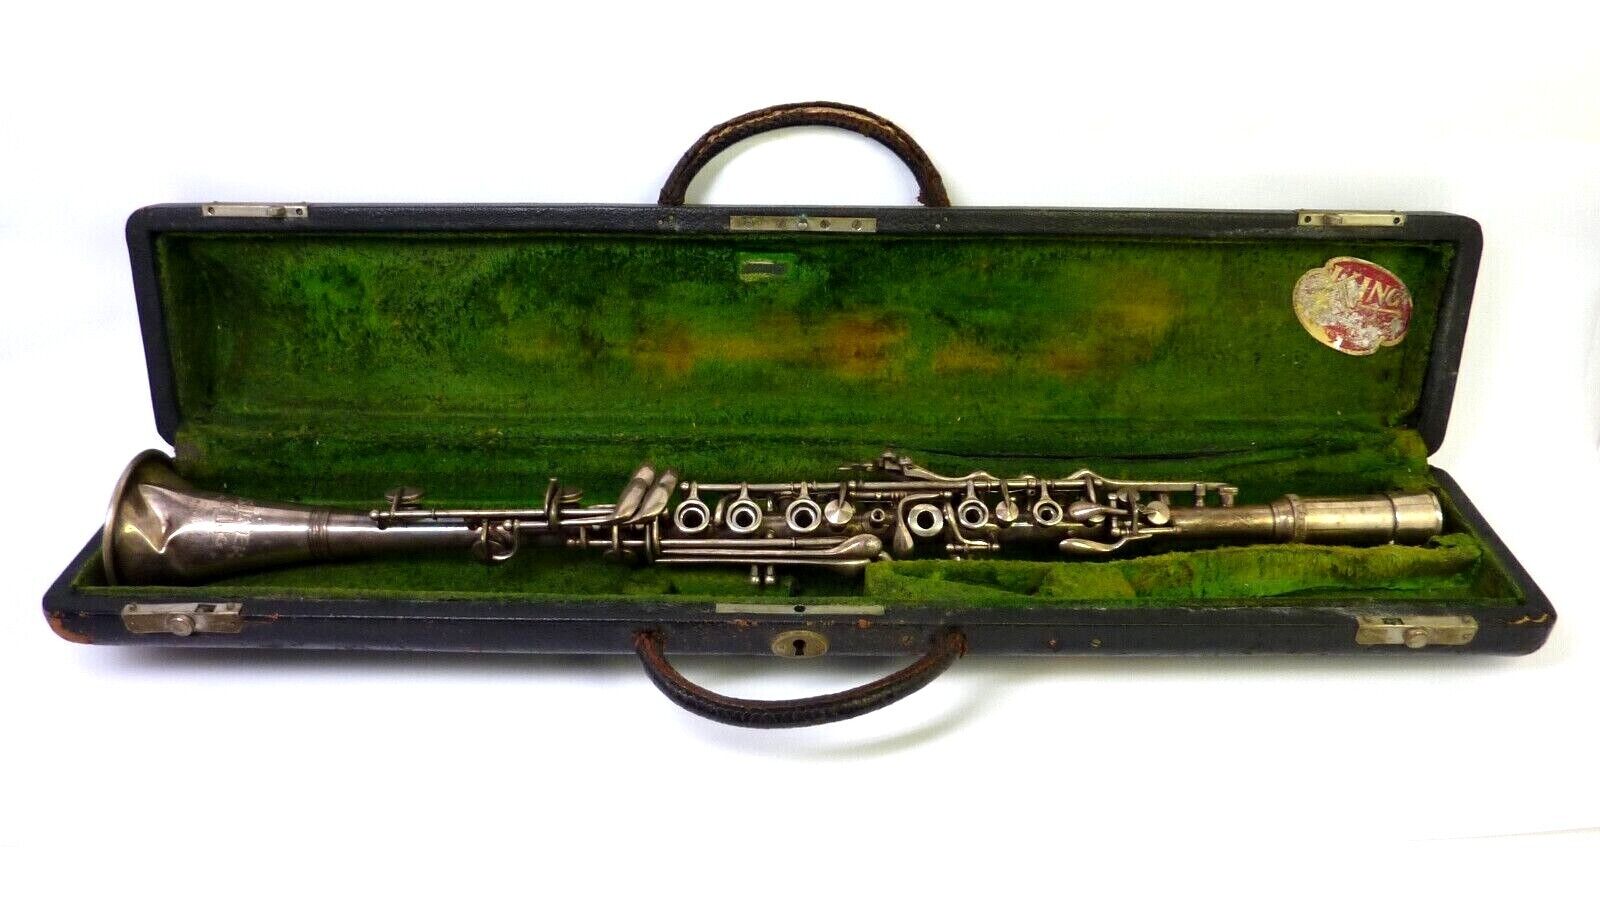 Vtg 1925-30 H.n. White Silver King Metal Clarinet Sterling Bell Sn 110278 Look!